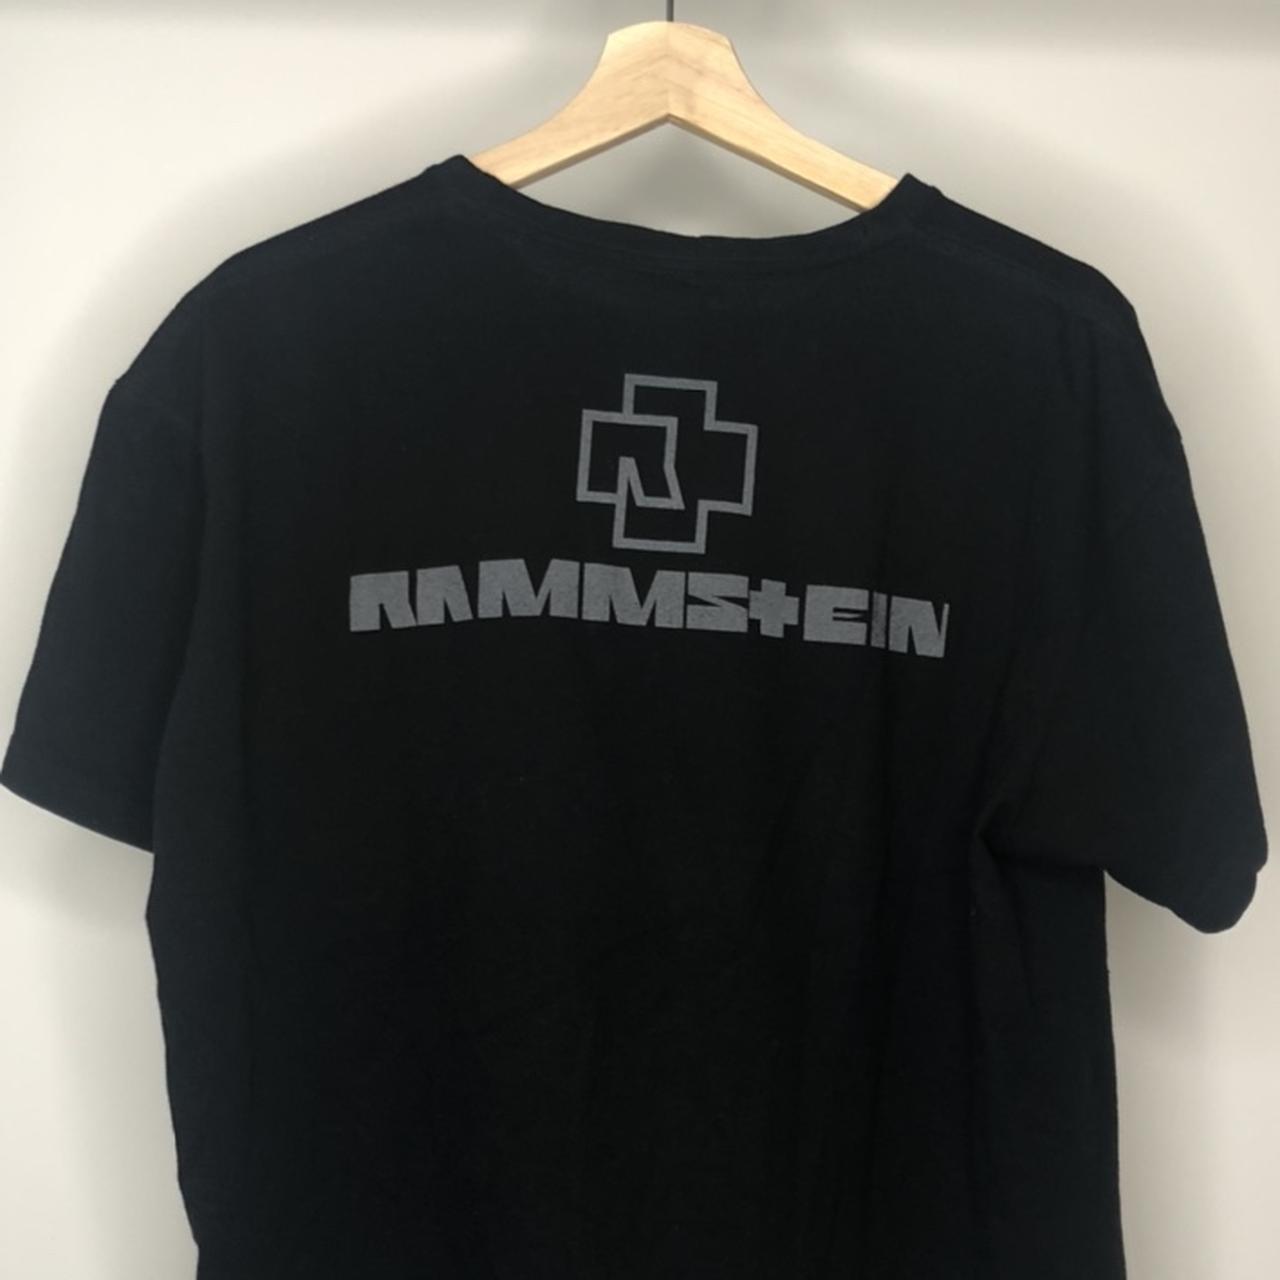 Rammstein band signatures American flag shirt - Dalatshirt